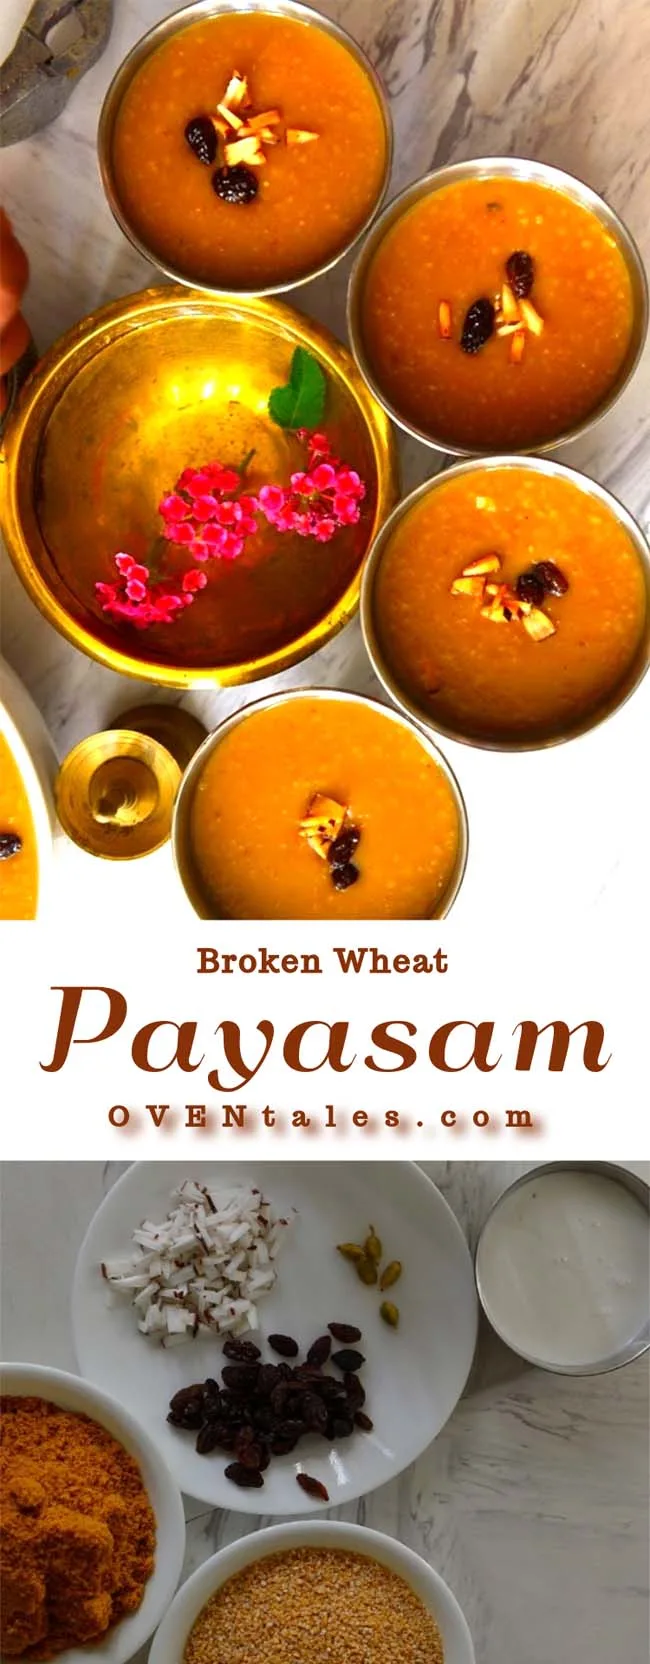 Broken wheat payasam or gothambu pradhaman